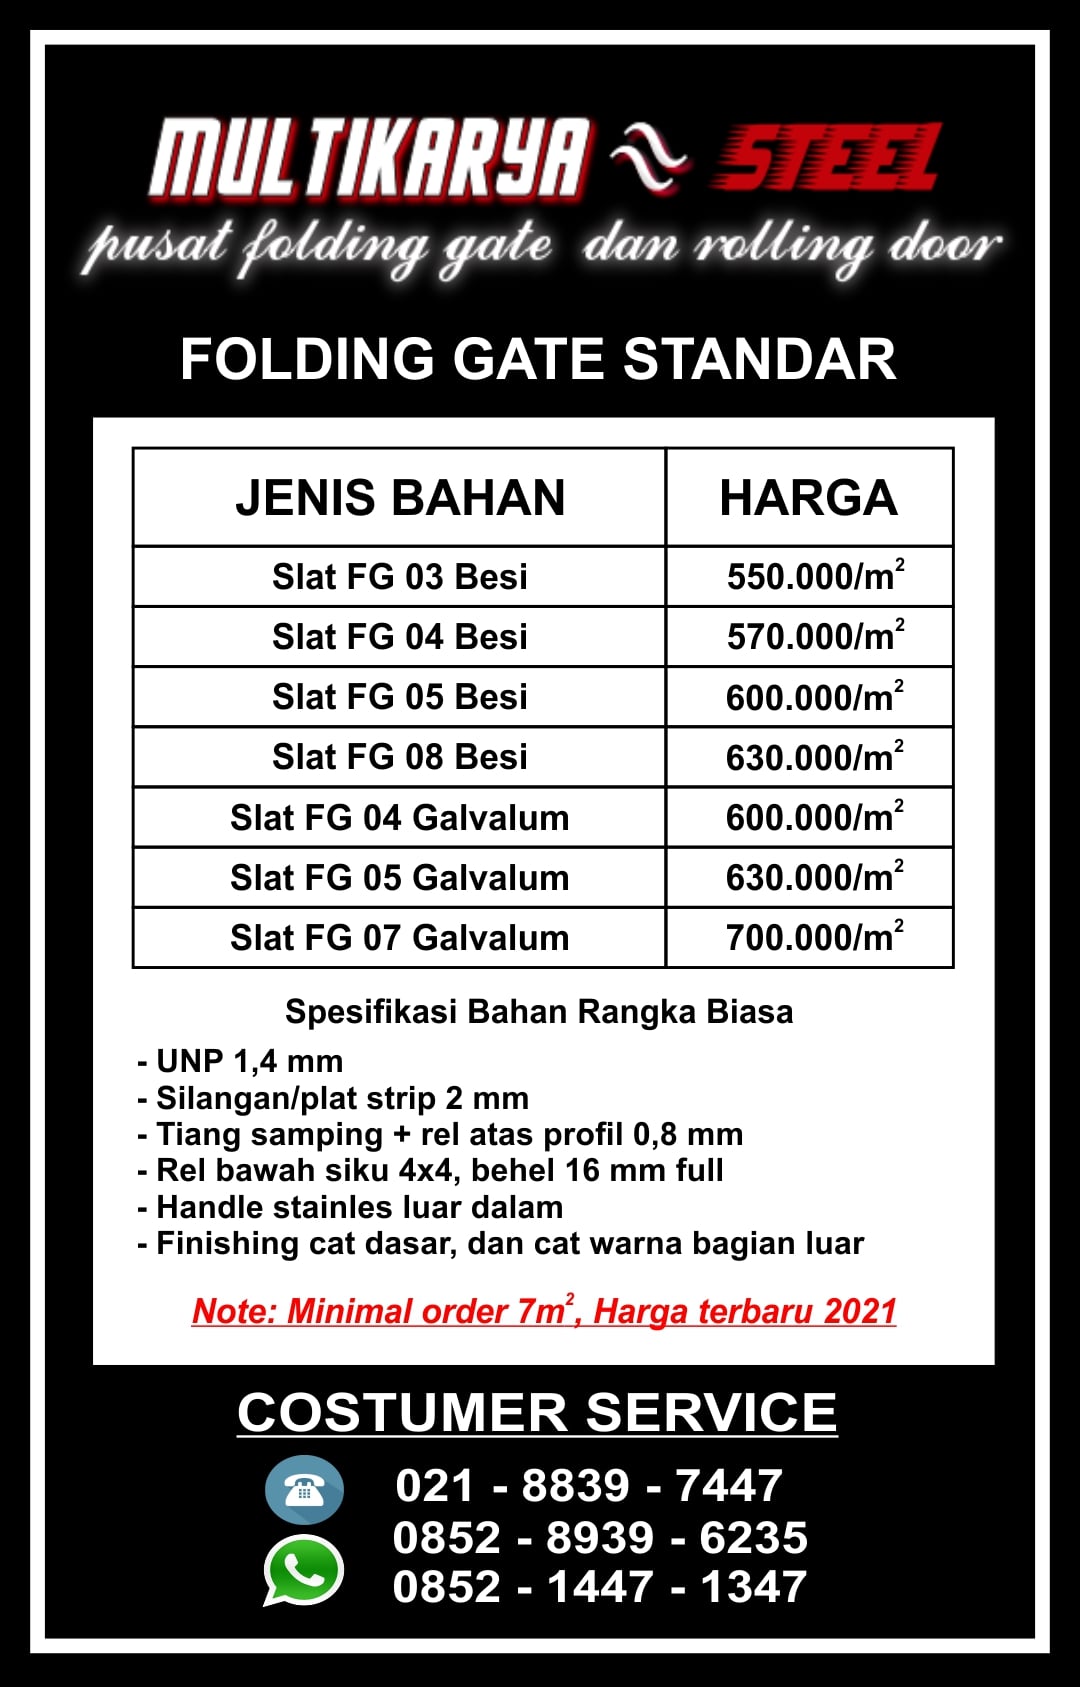 Daftar Harga Folding Gate Standar Multi Karya Steel